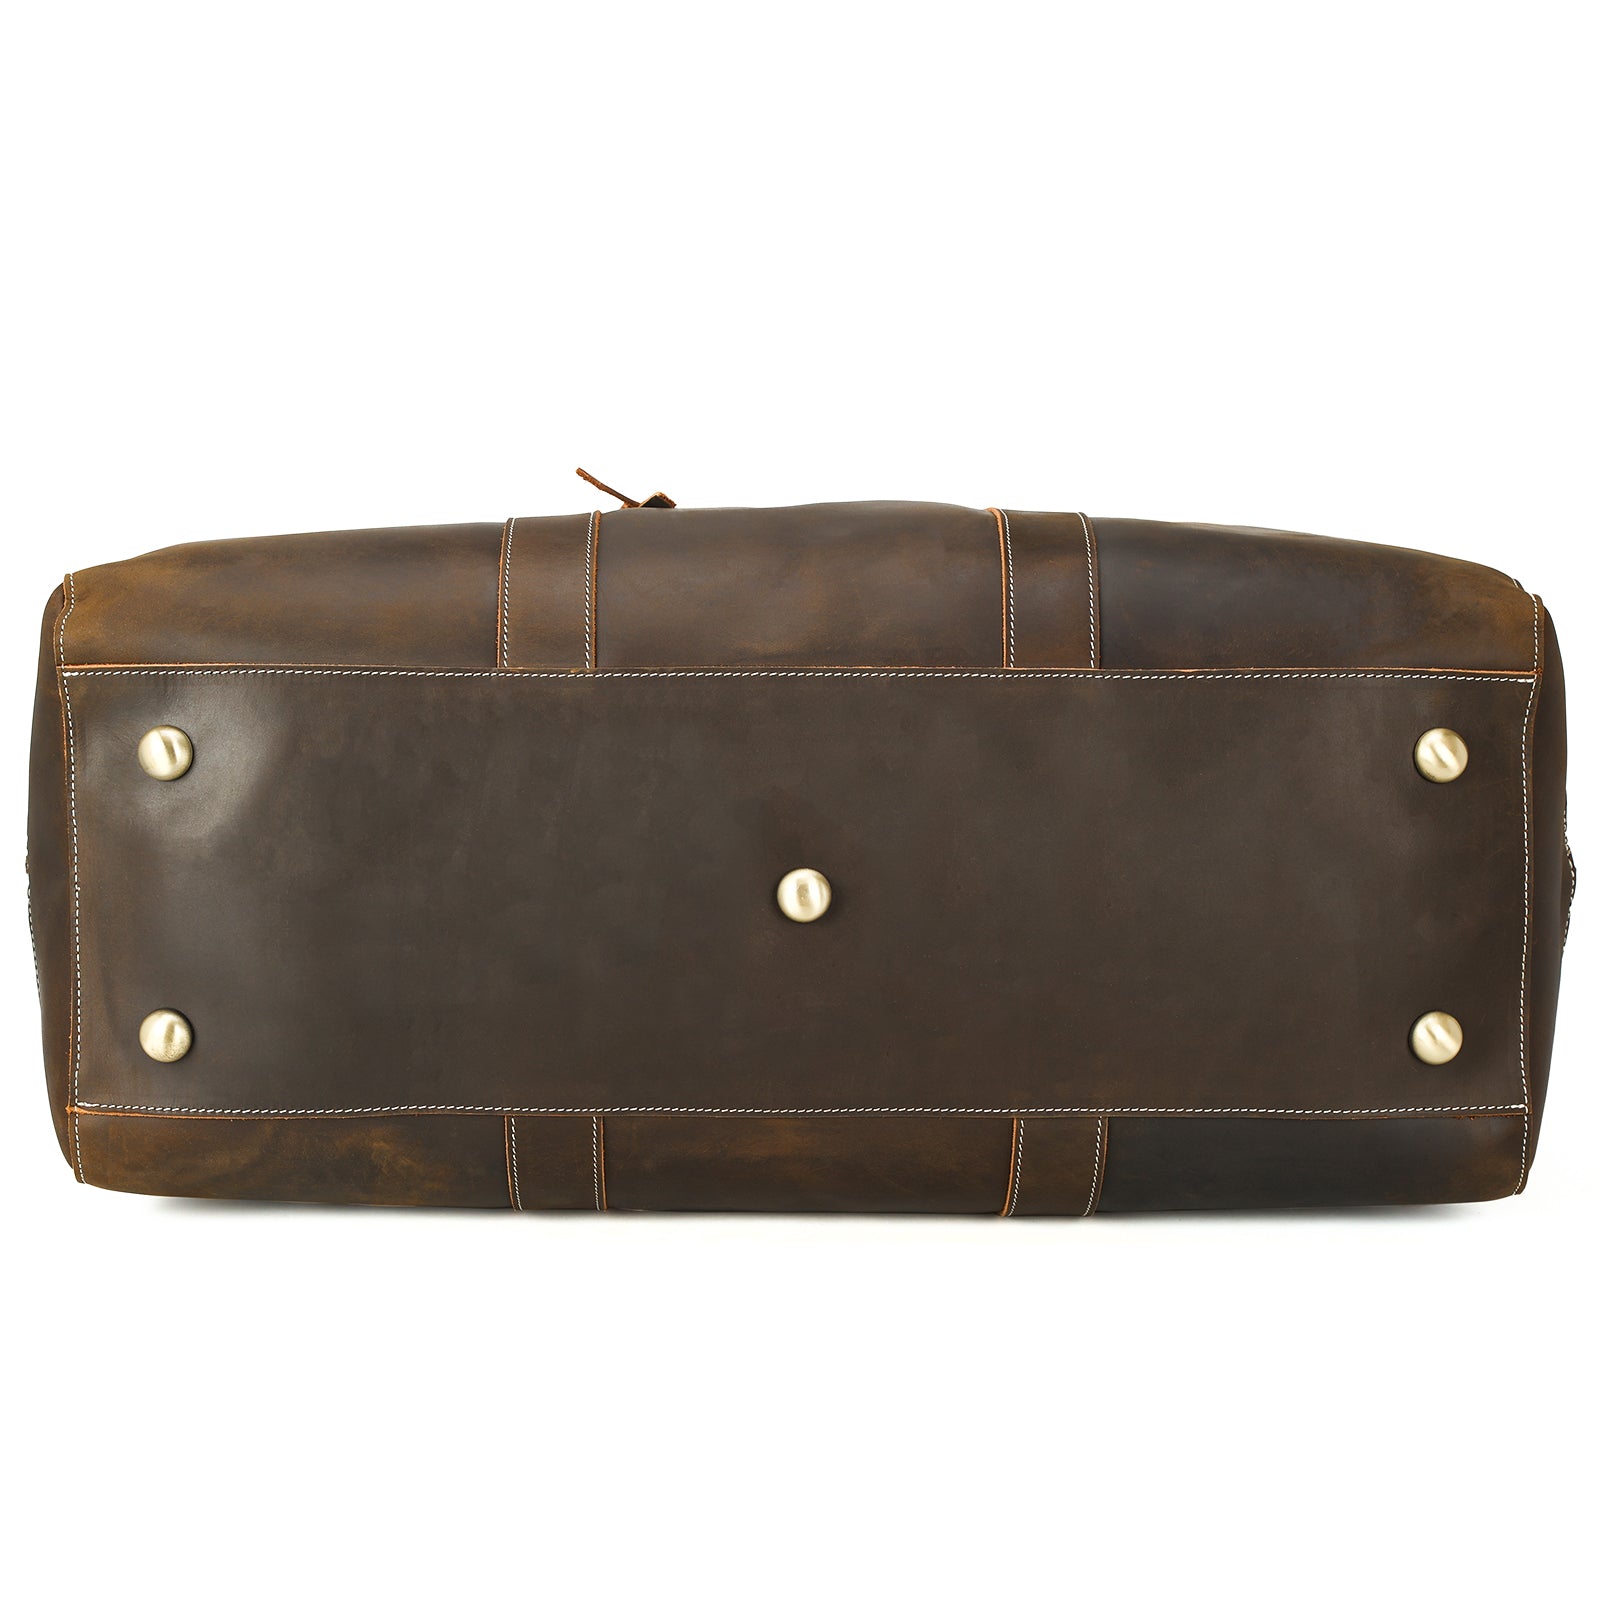 Polare 23.2'' Leather Duffel Bag Overnight Weekender Bag (Brown, Bottom)